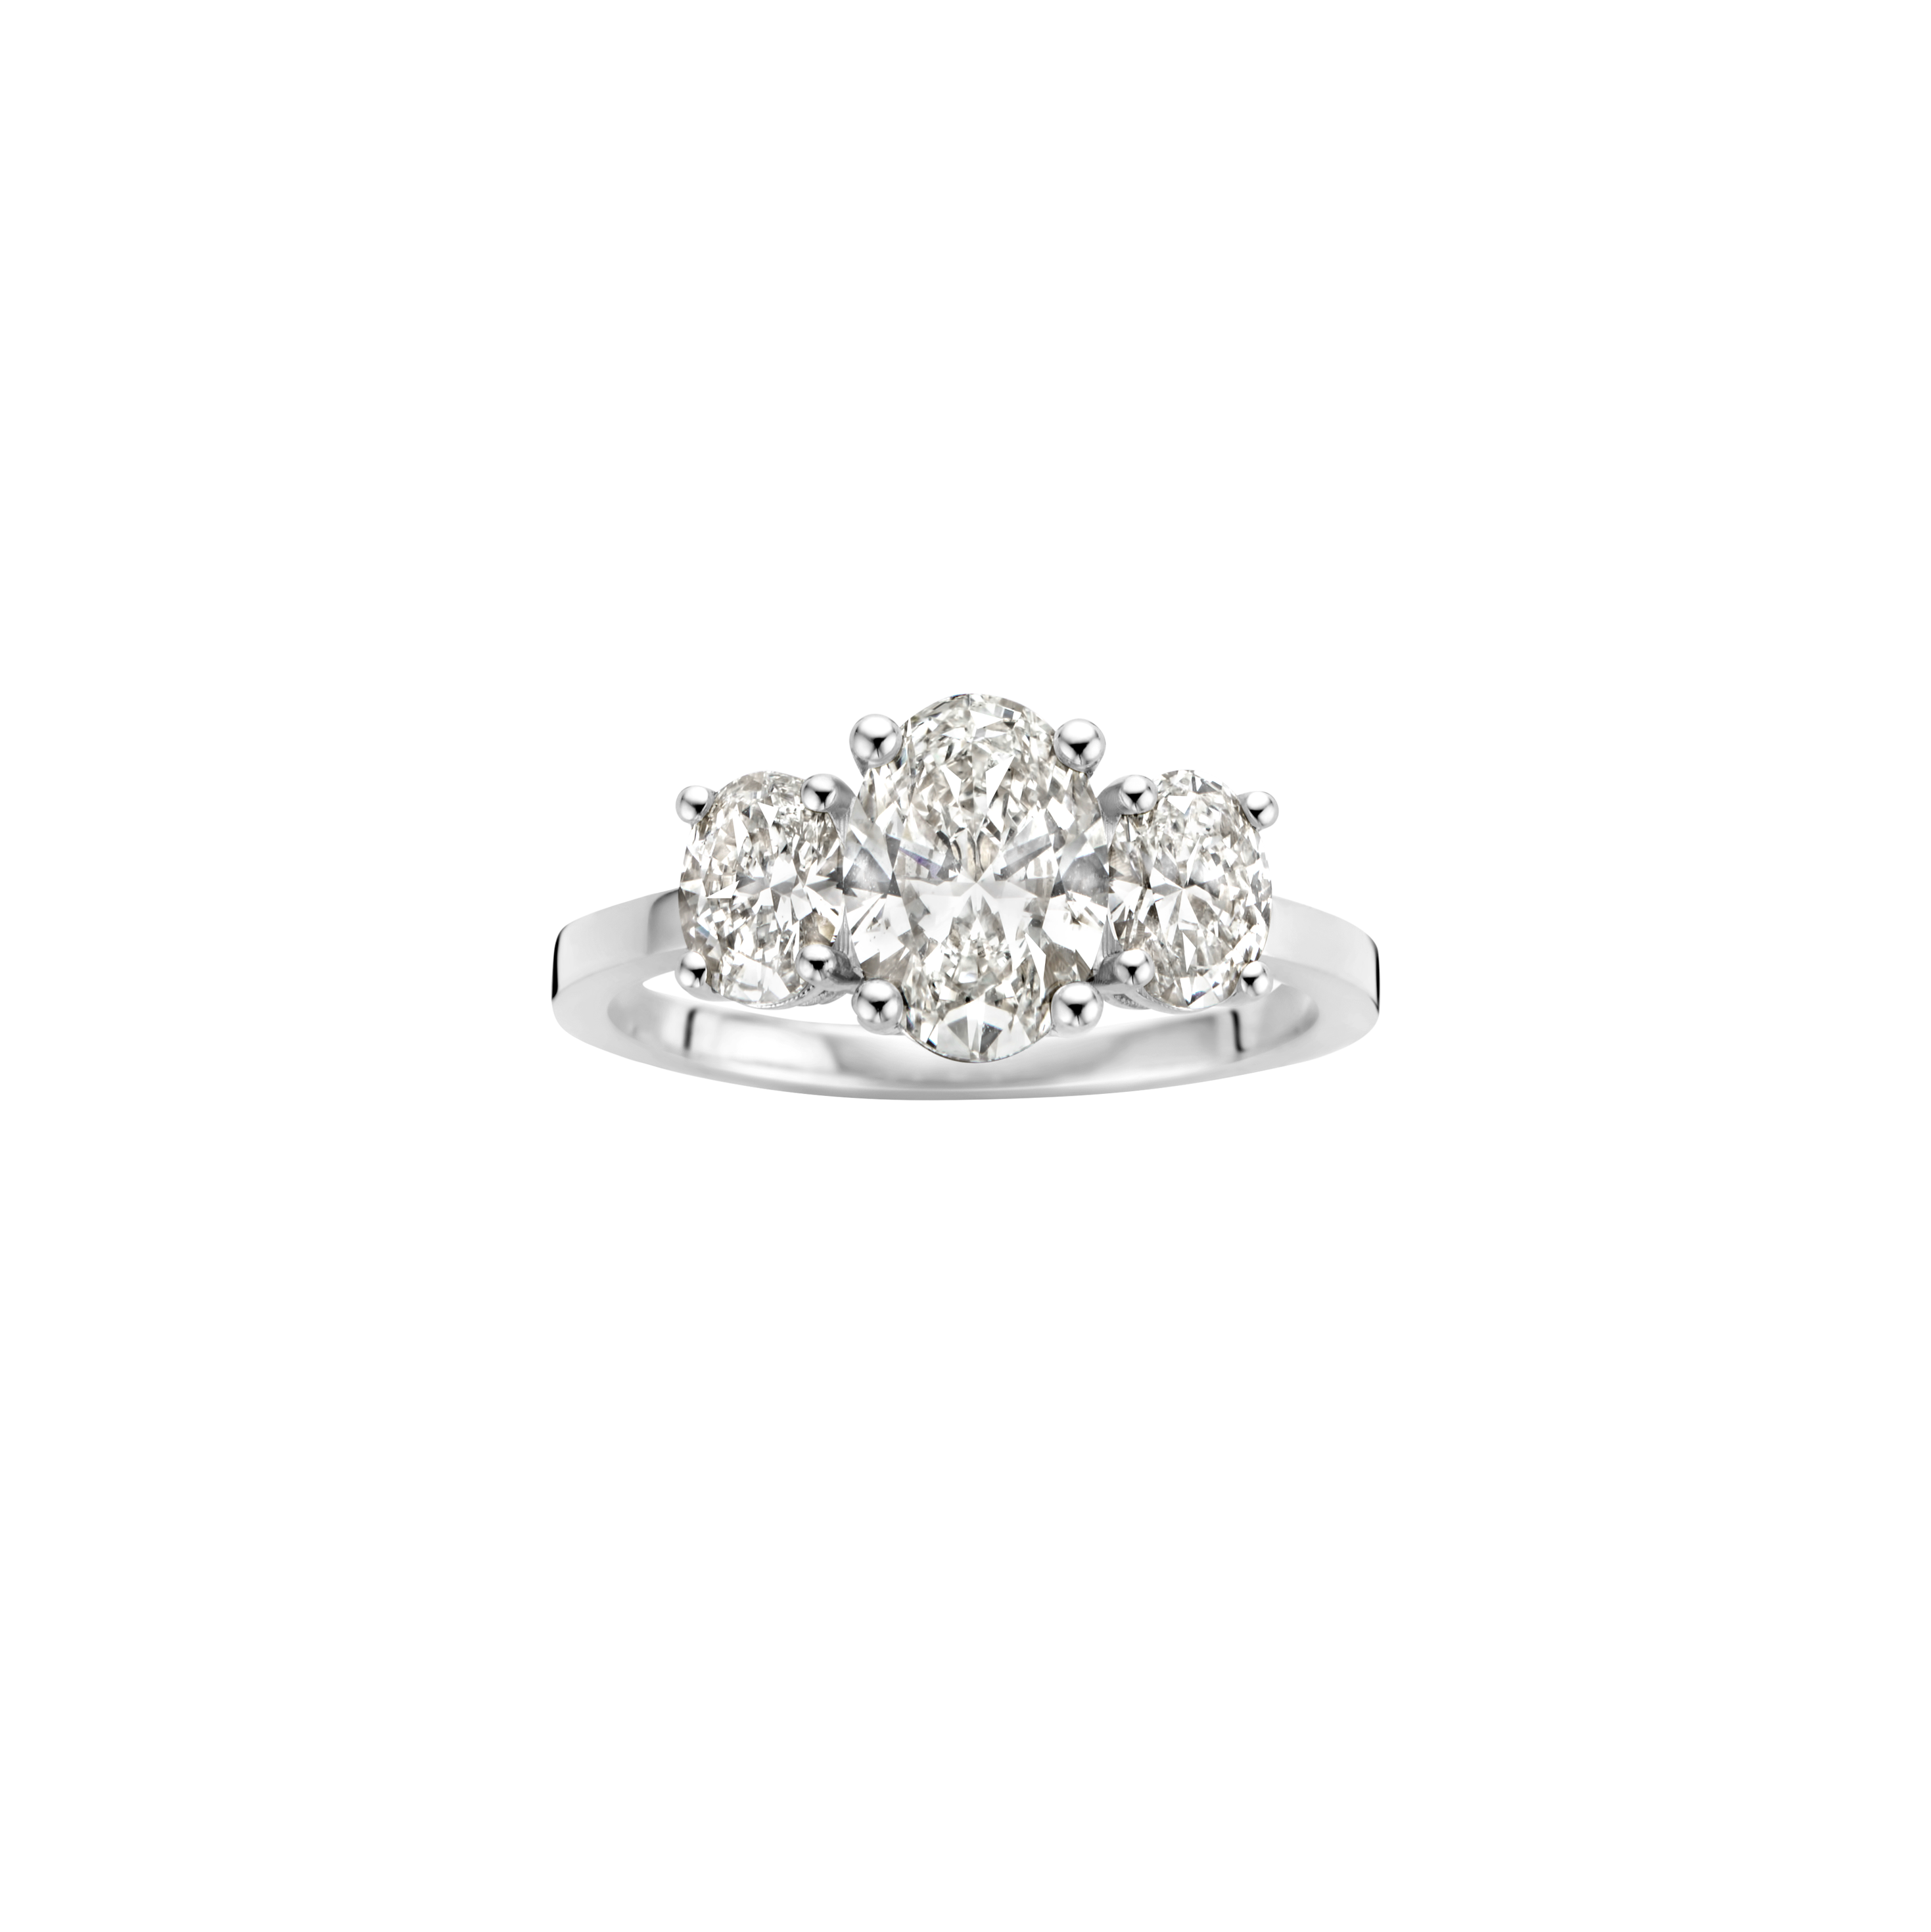 Jane engagement ring packshot - white gold